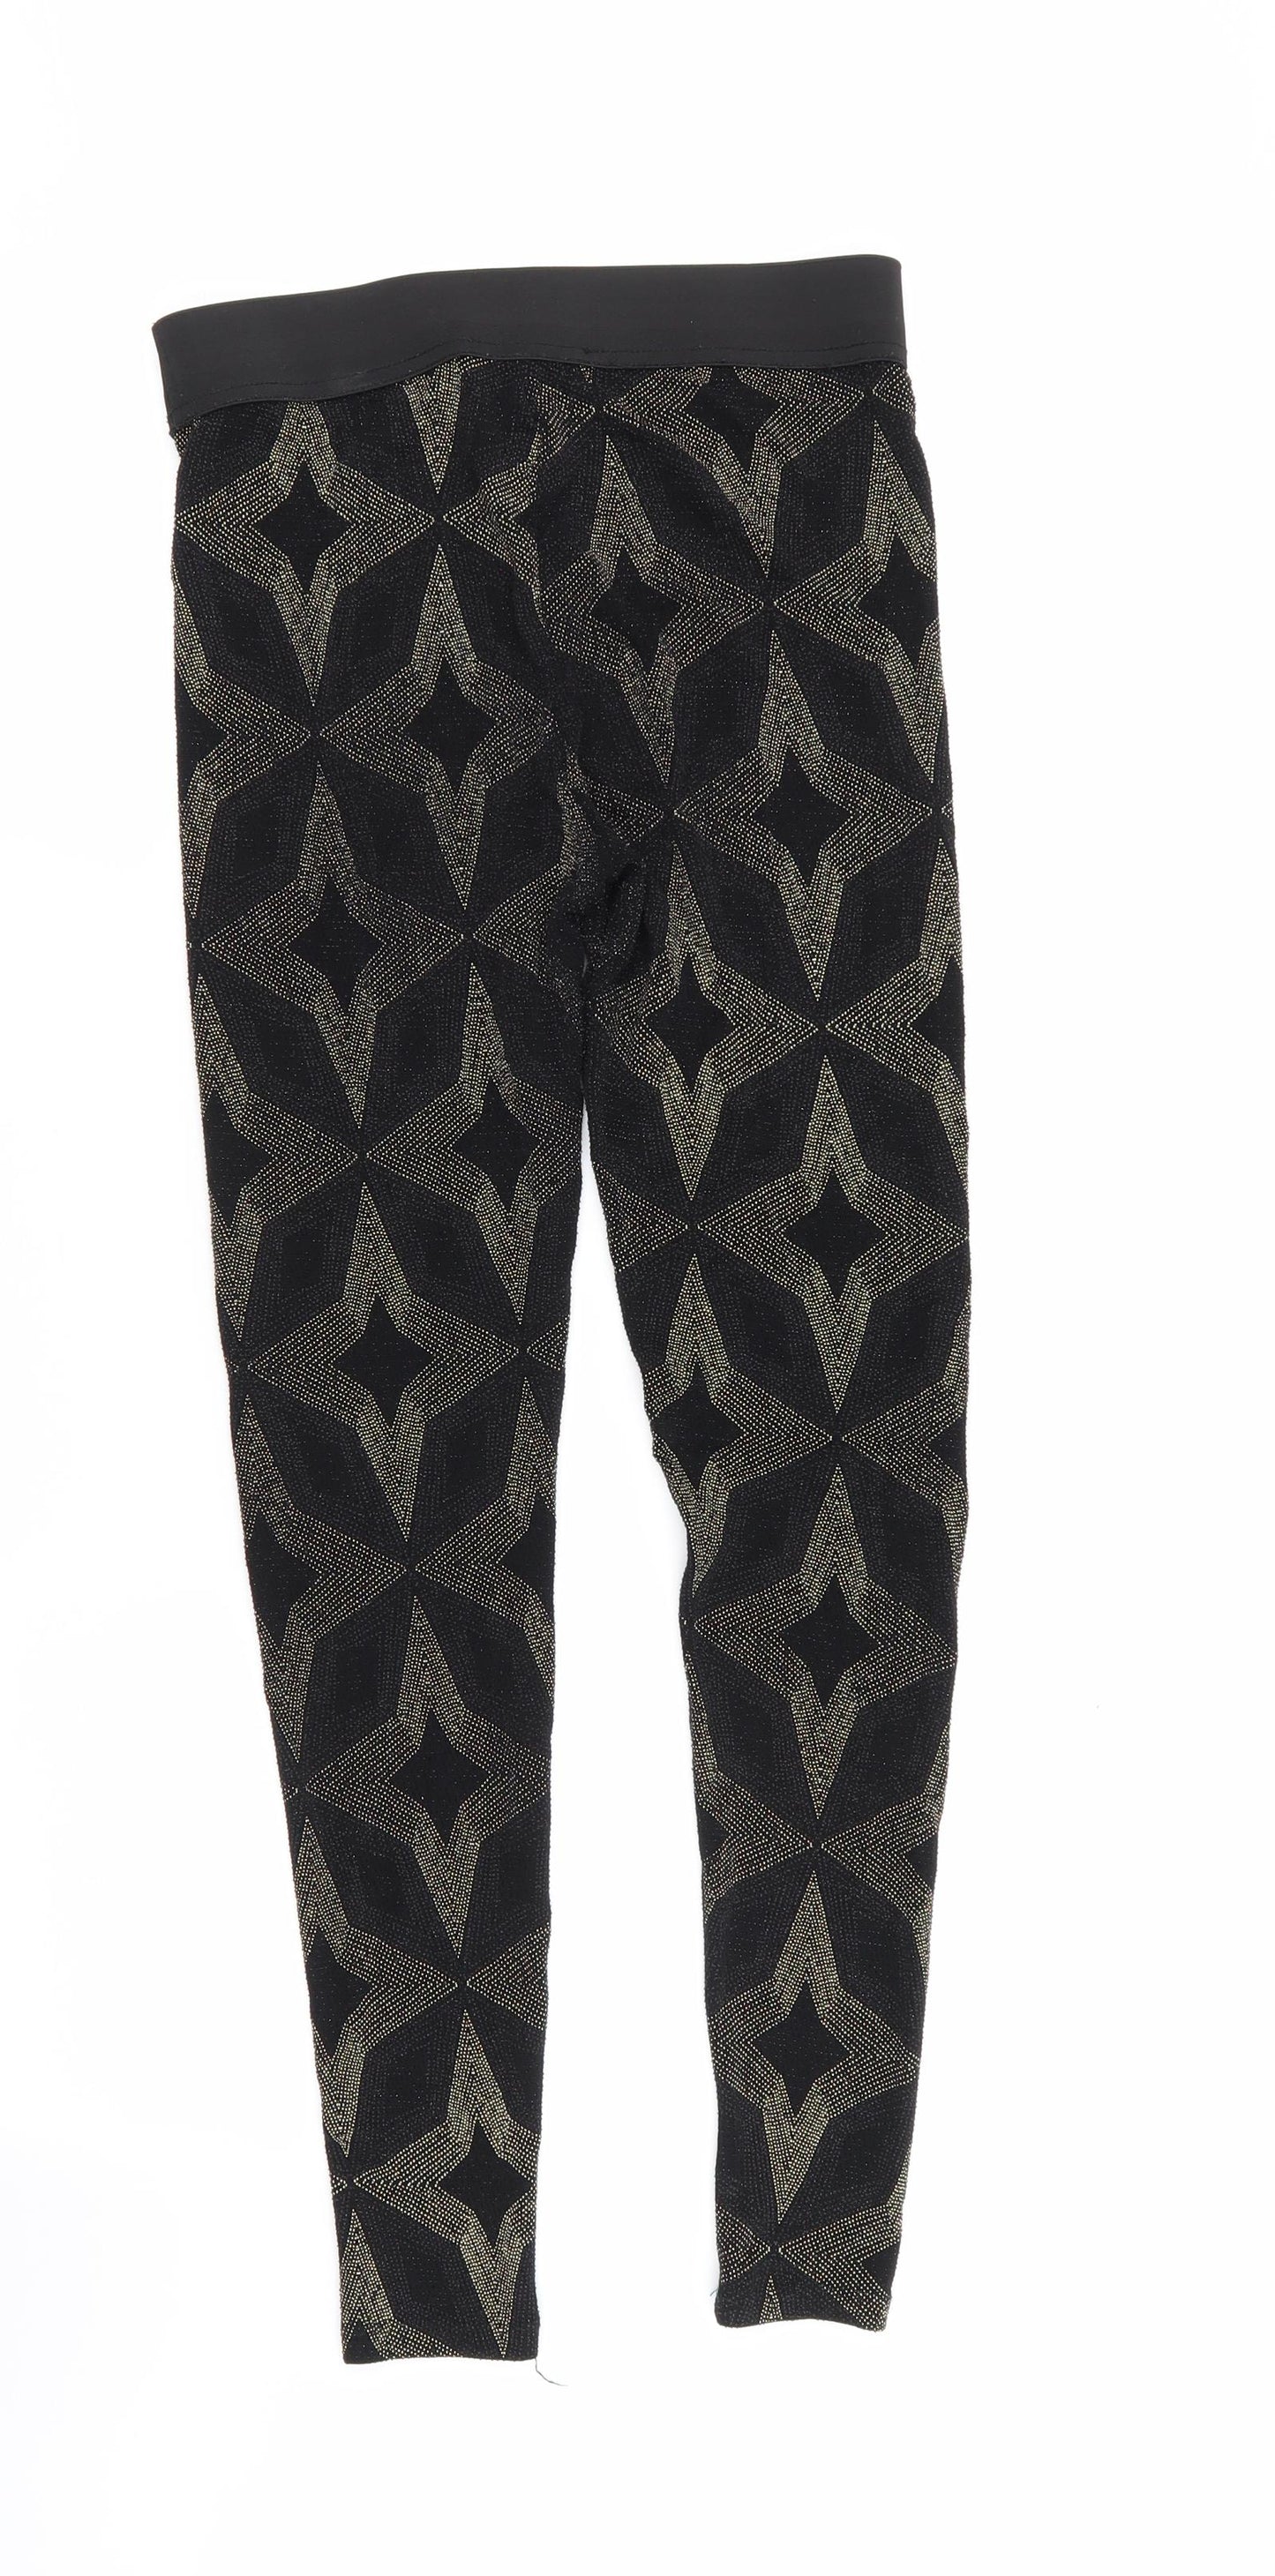 Primark Womens Black Geometric  Jegging Leggings Size 10 L28 in - Stretch waistband/legging